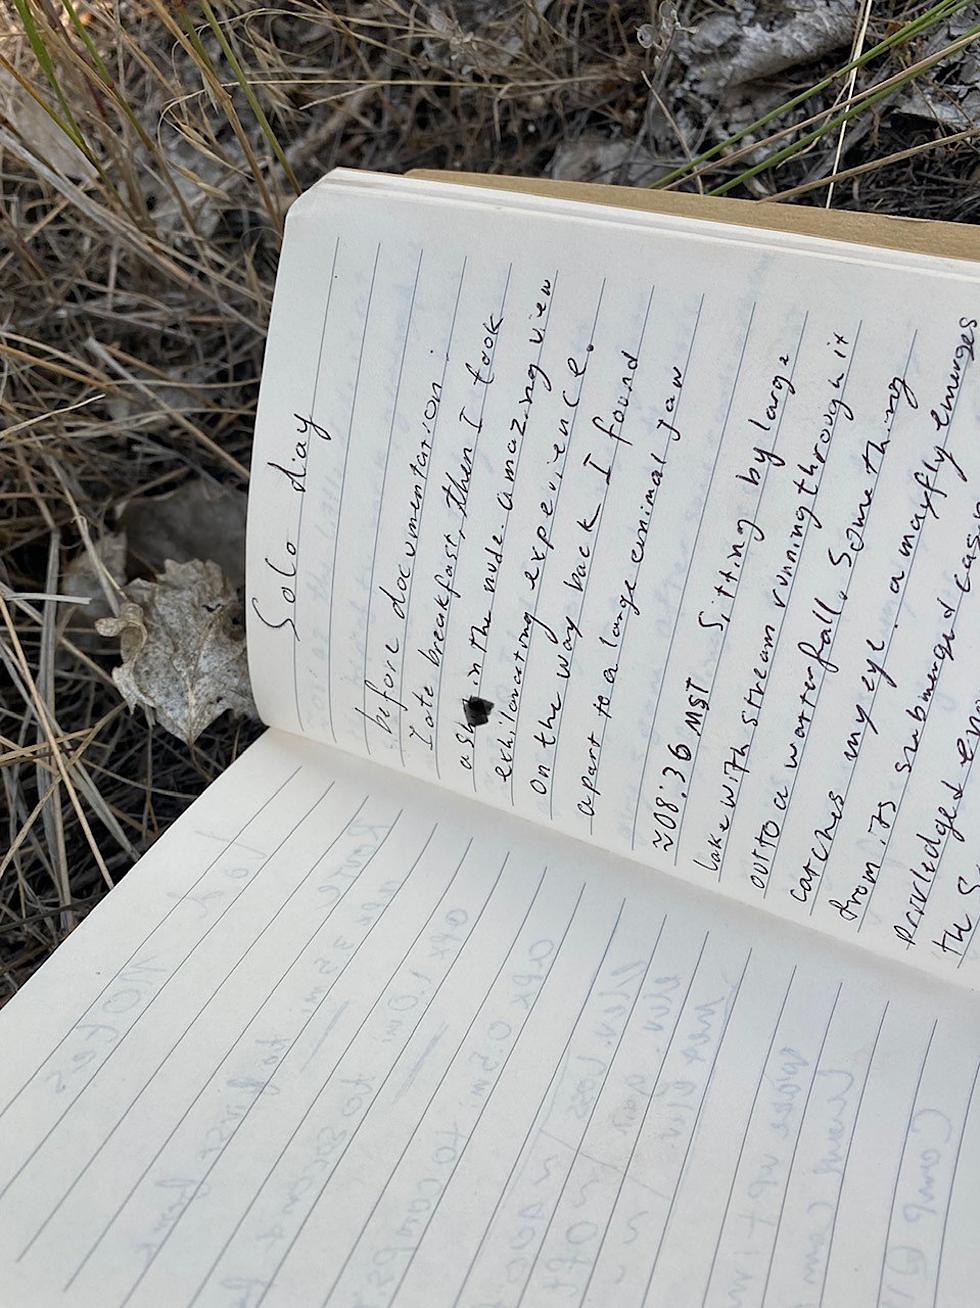 FOUND: Eccentric Journal Lost Deep In The Wyoming Wilderness